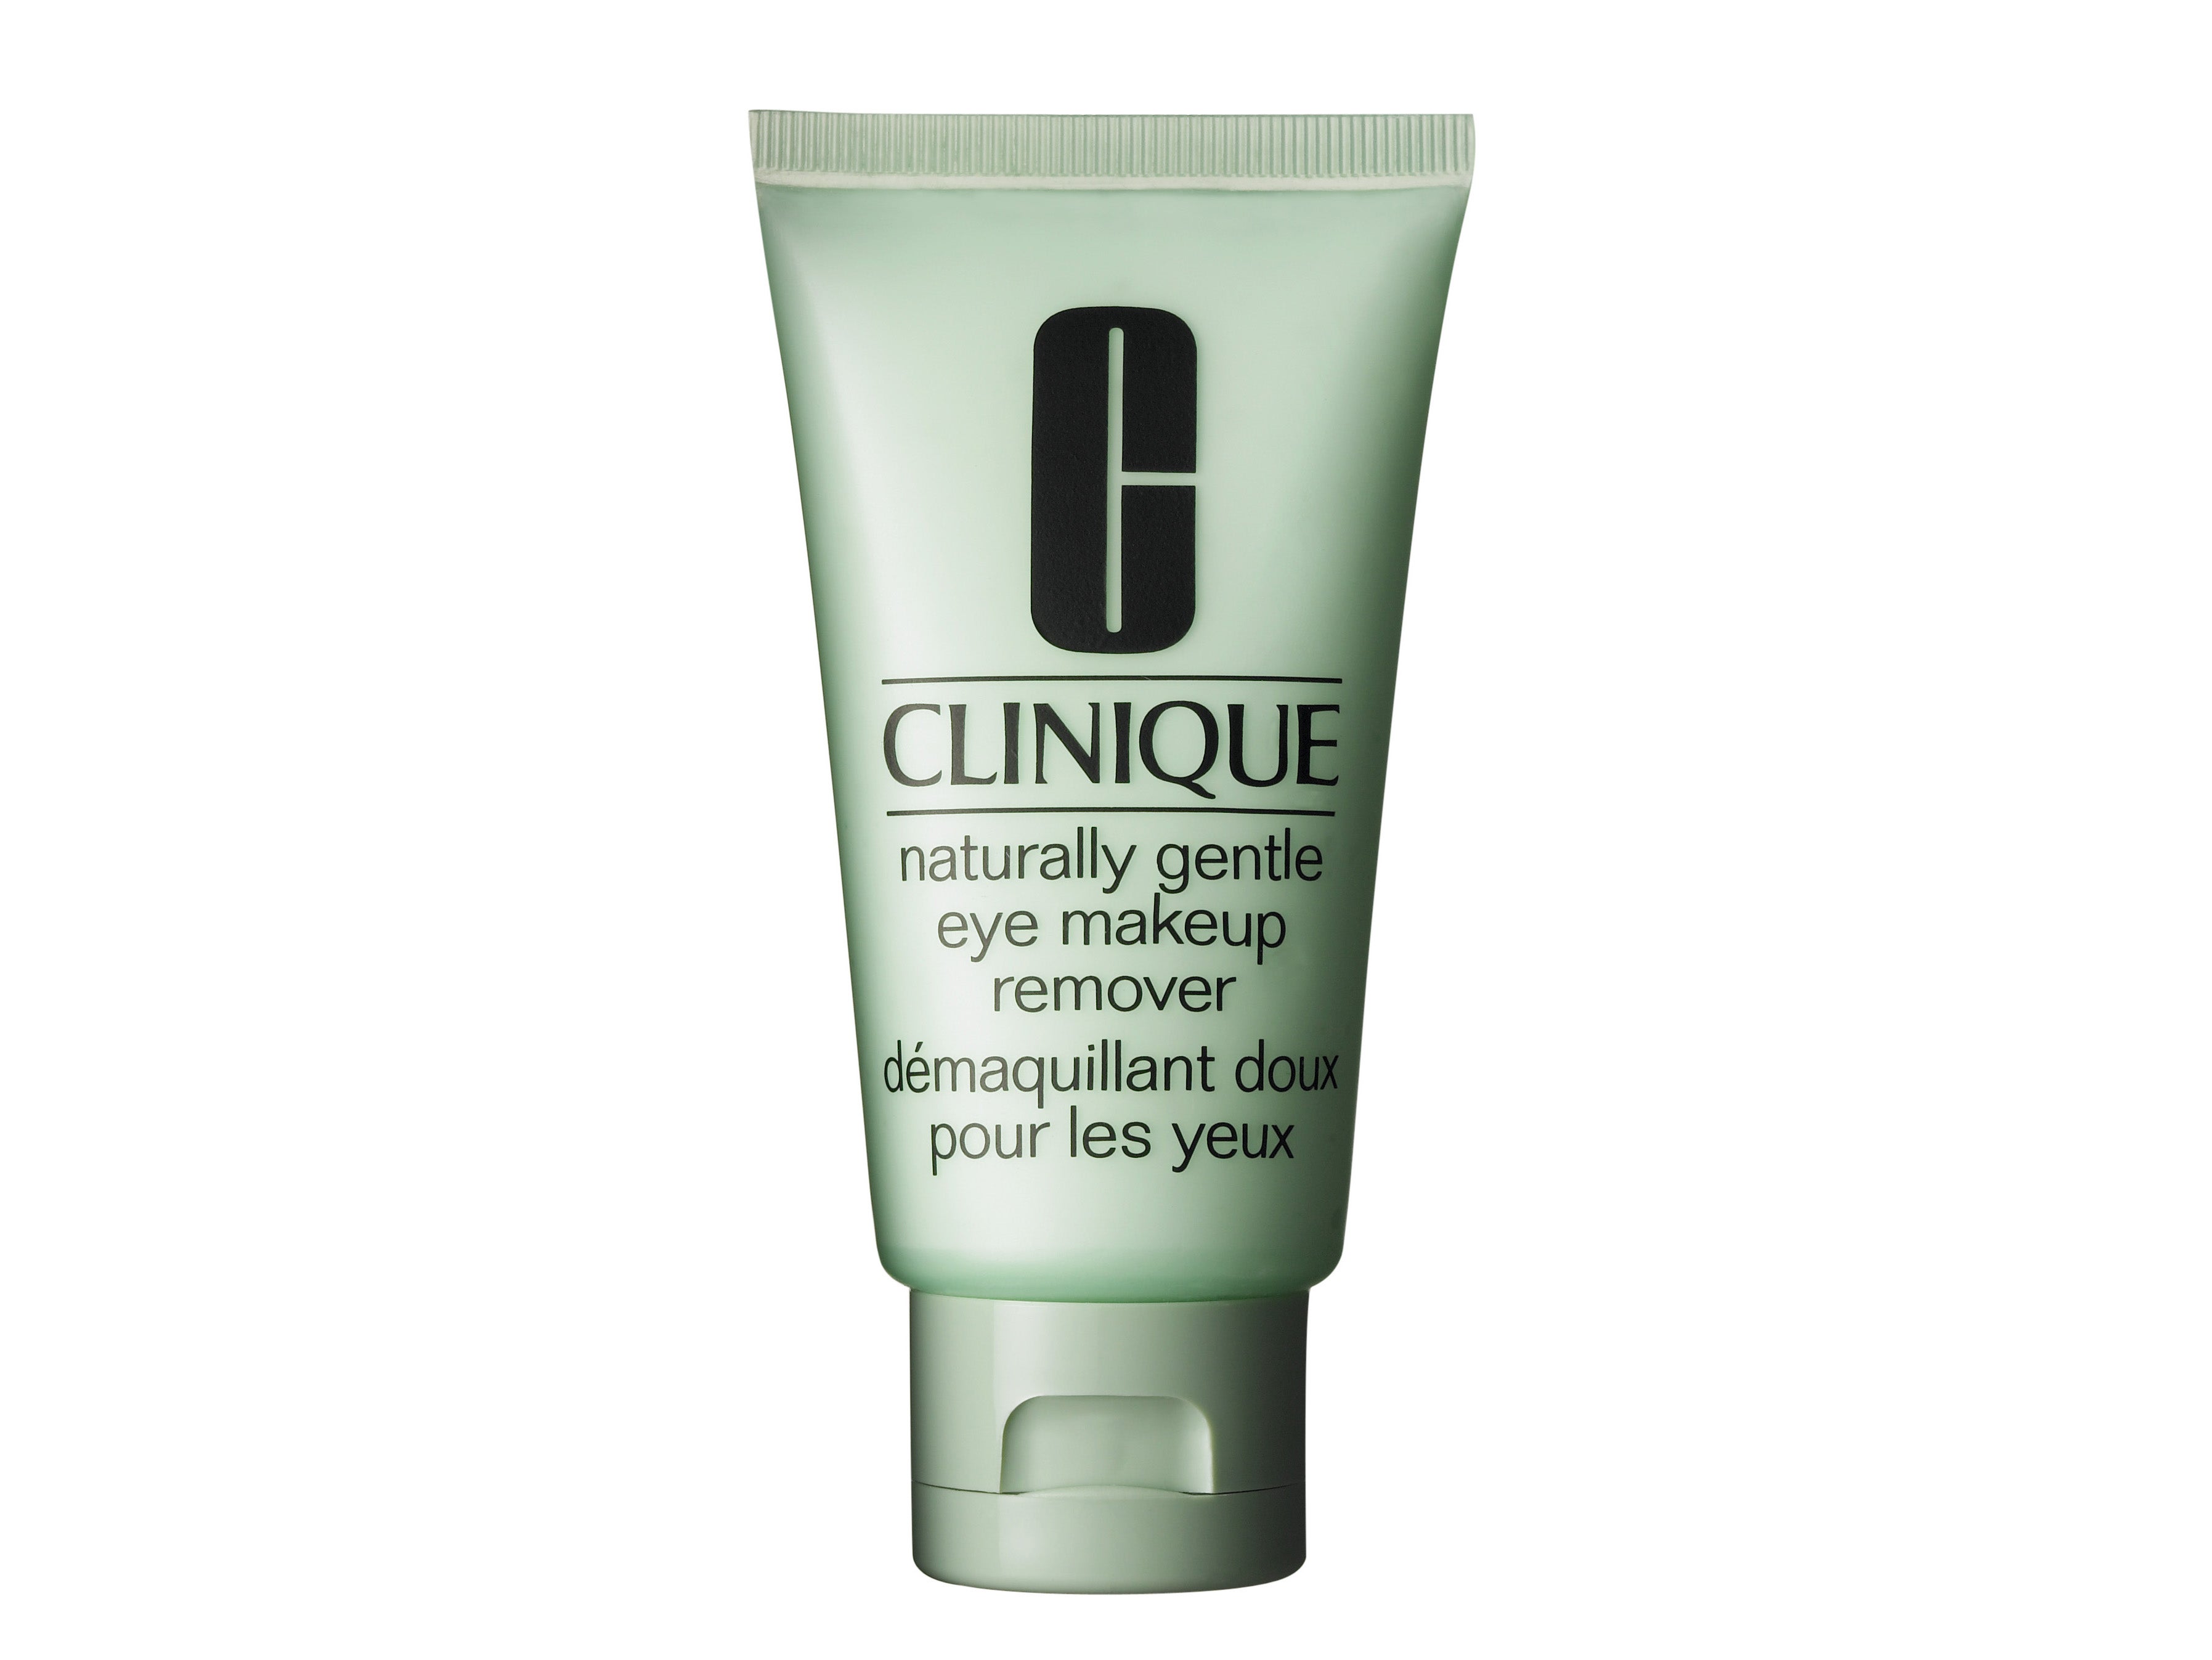 Clinique Naturally Gentle EMye Makeup Remover.jpg